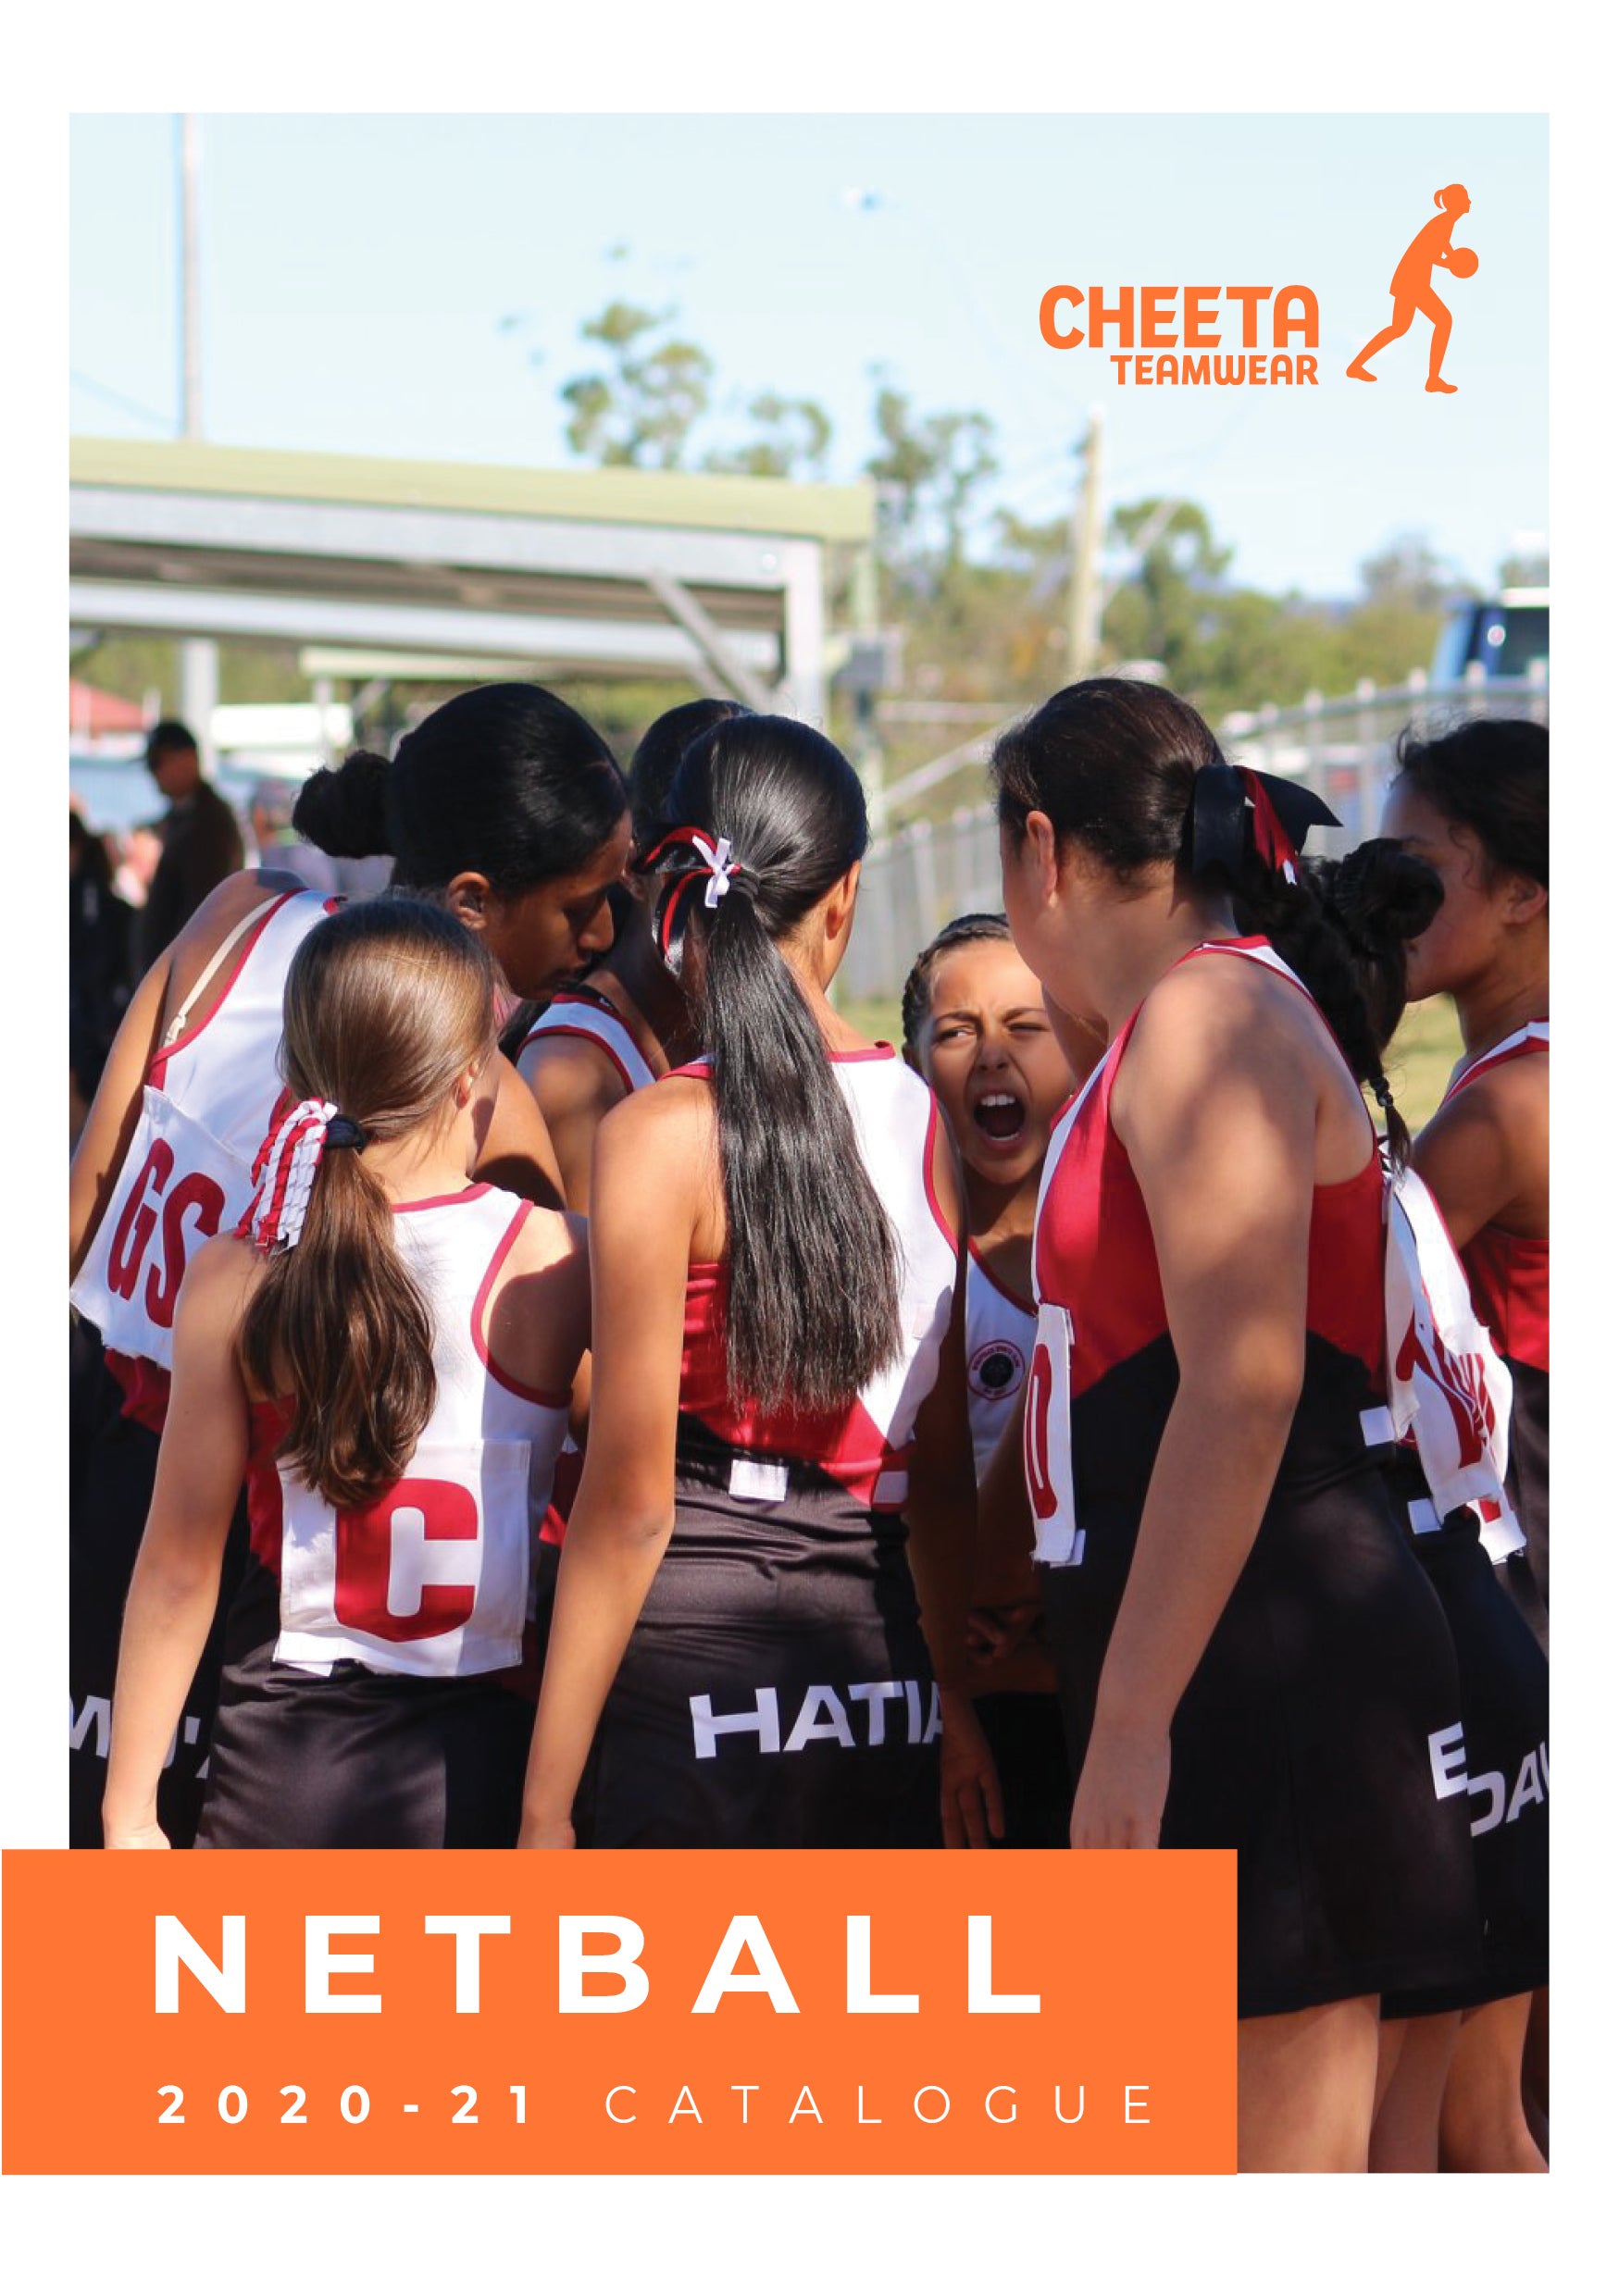 Cheeta Teamwear  Netball Catalogue Final ?v=1604446752